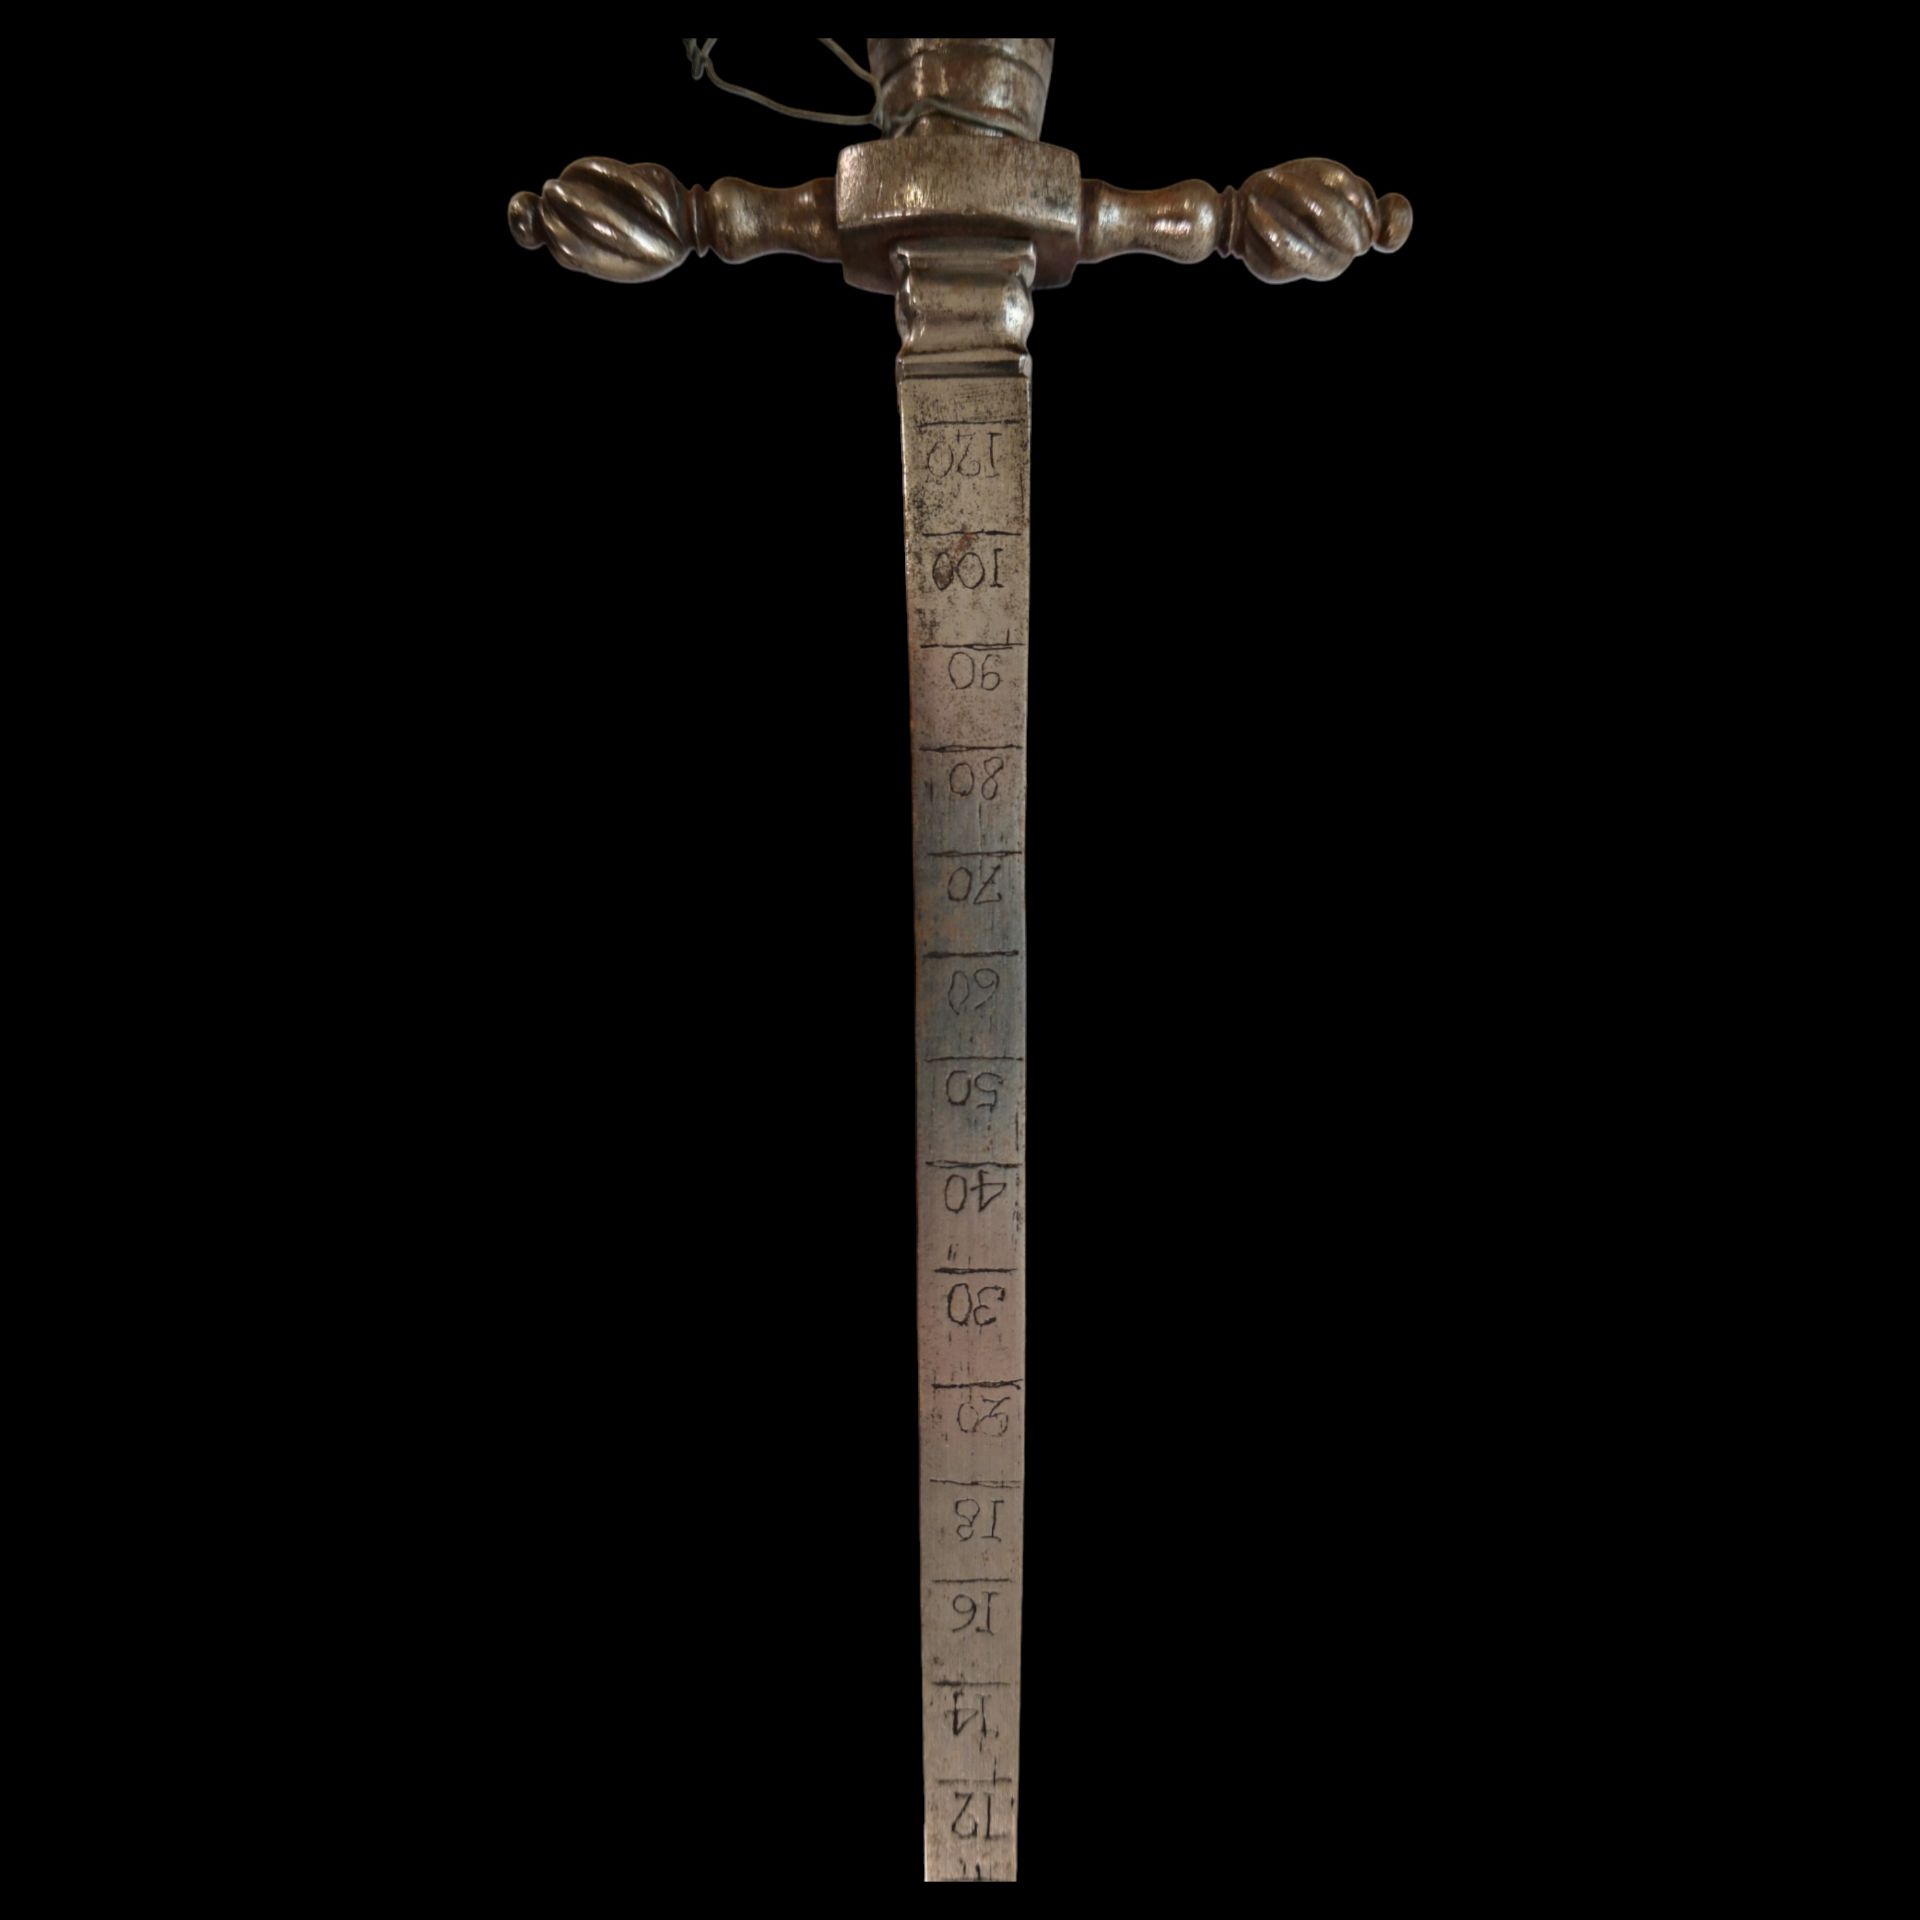 An Italian Gunners, Artilleryman's Stiletto Dagger, late 17th century. - Image 8 of 13